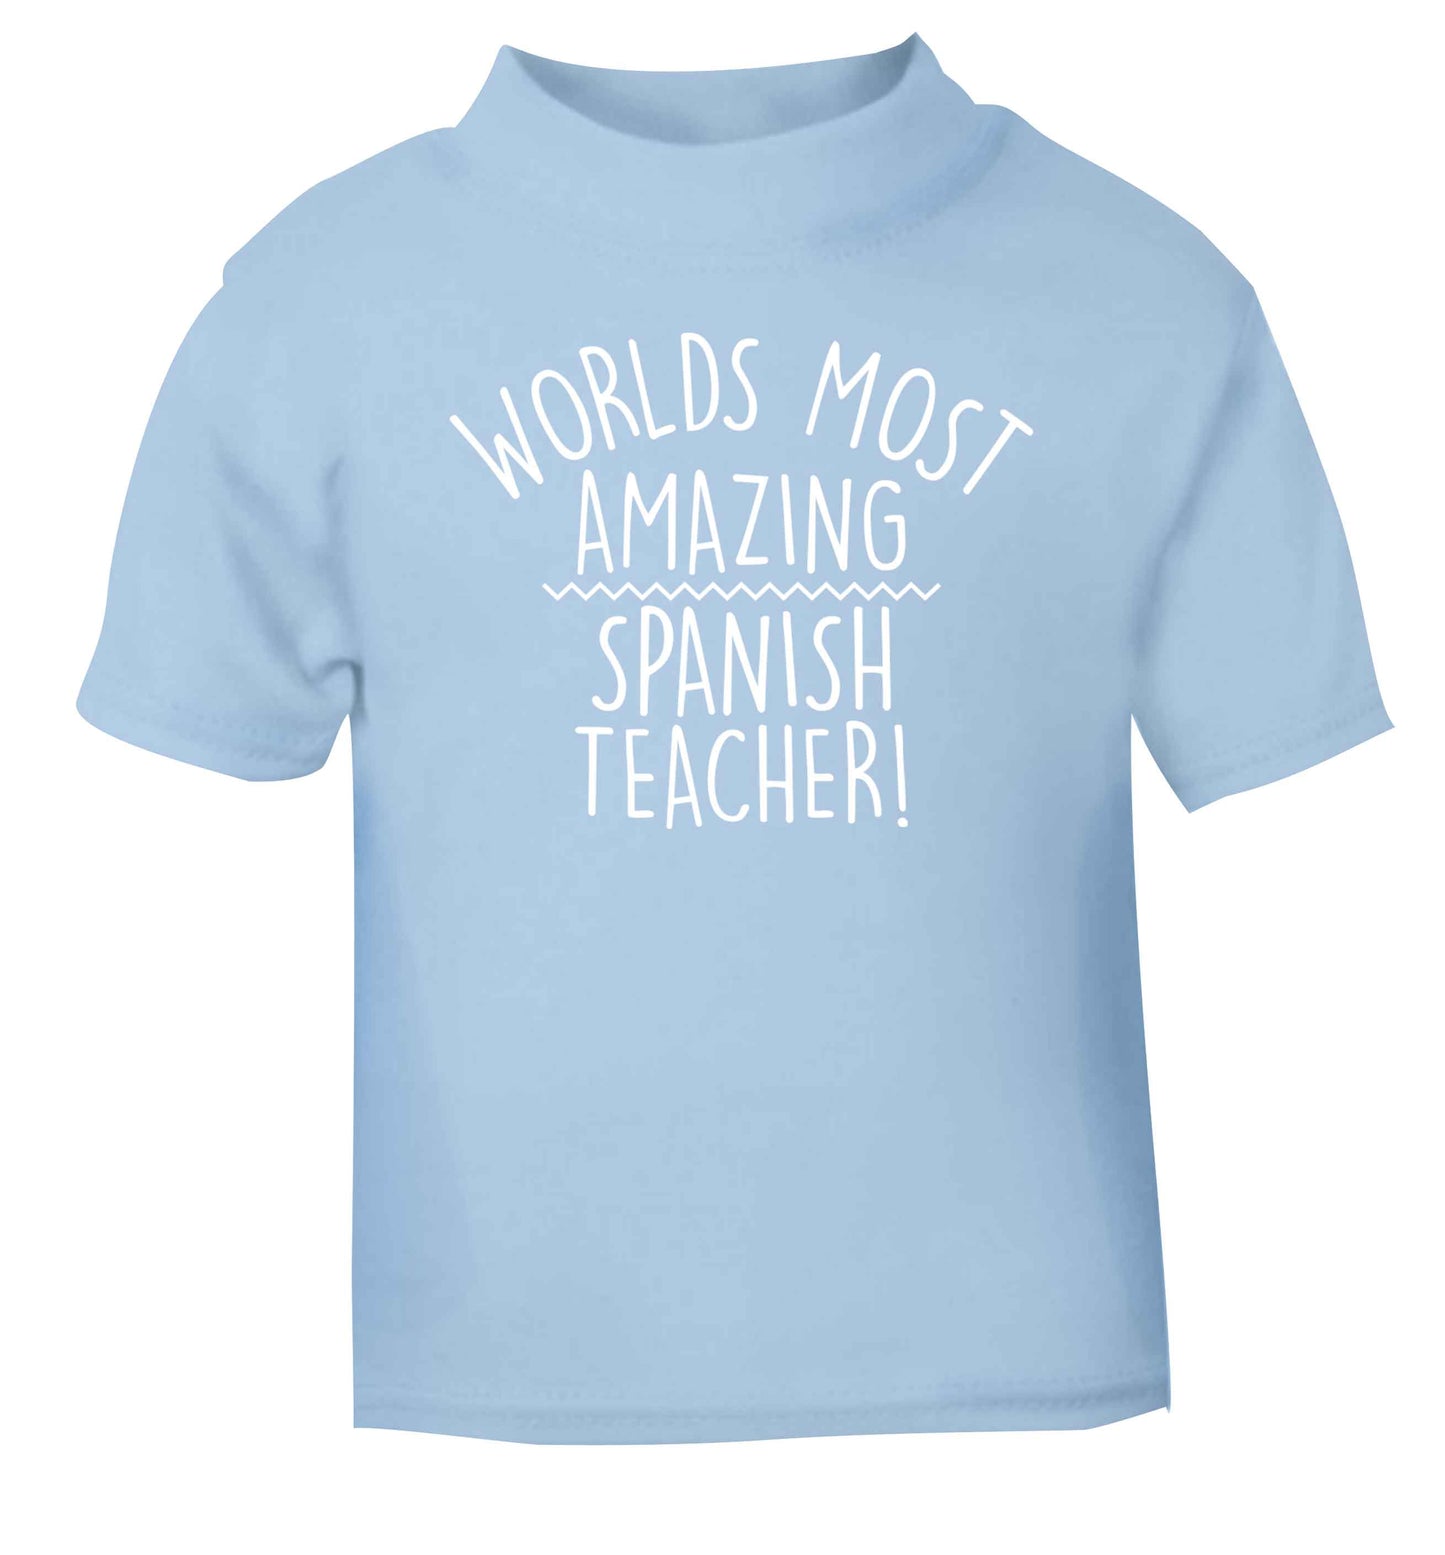 Worlds most amazing Spanish teacher light blue baby toddler Tshirt 2 Years